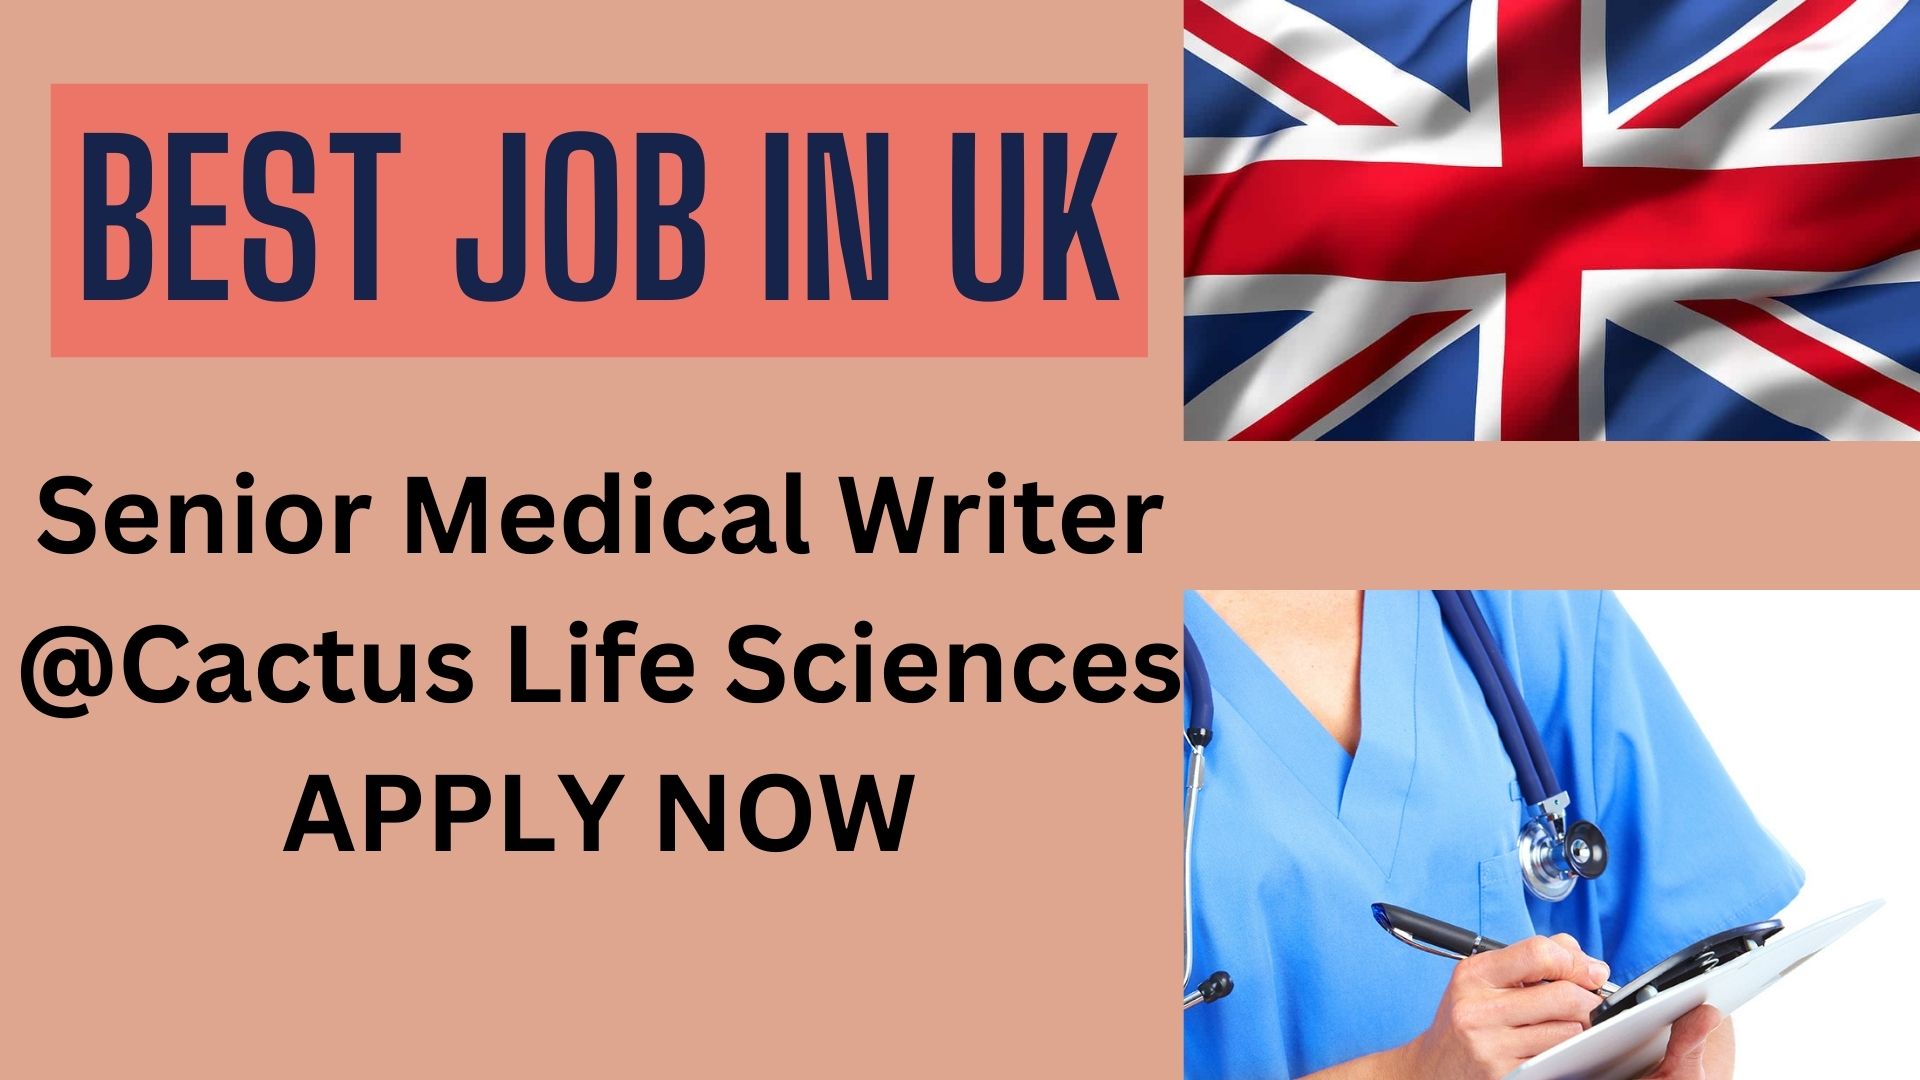 Best Job in UK as Senior Medical Writer at Cactus Life Sciences ; APPLY NOW